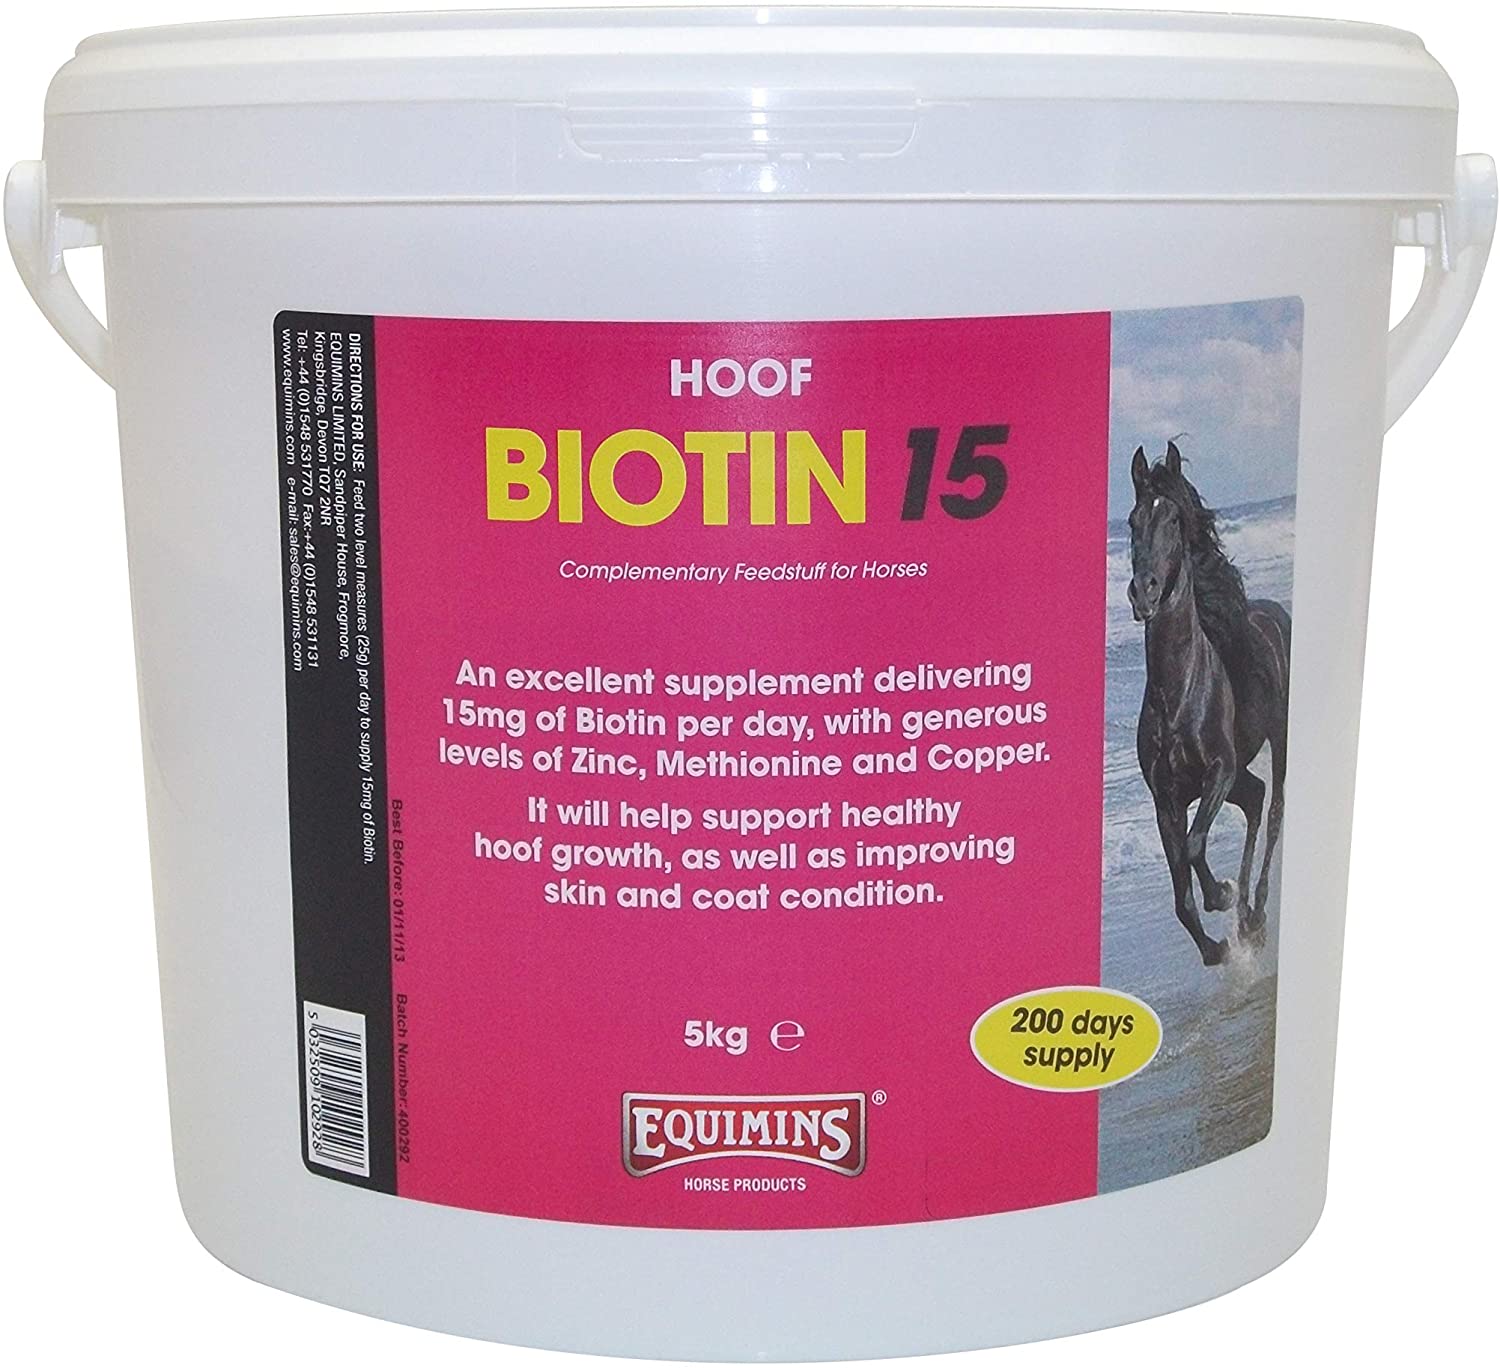  Equimins EQS0033 Suplemento Biotina 15, Unisex Adulto, Transparente, 1 kg 